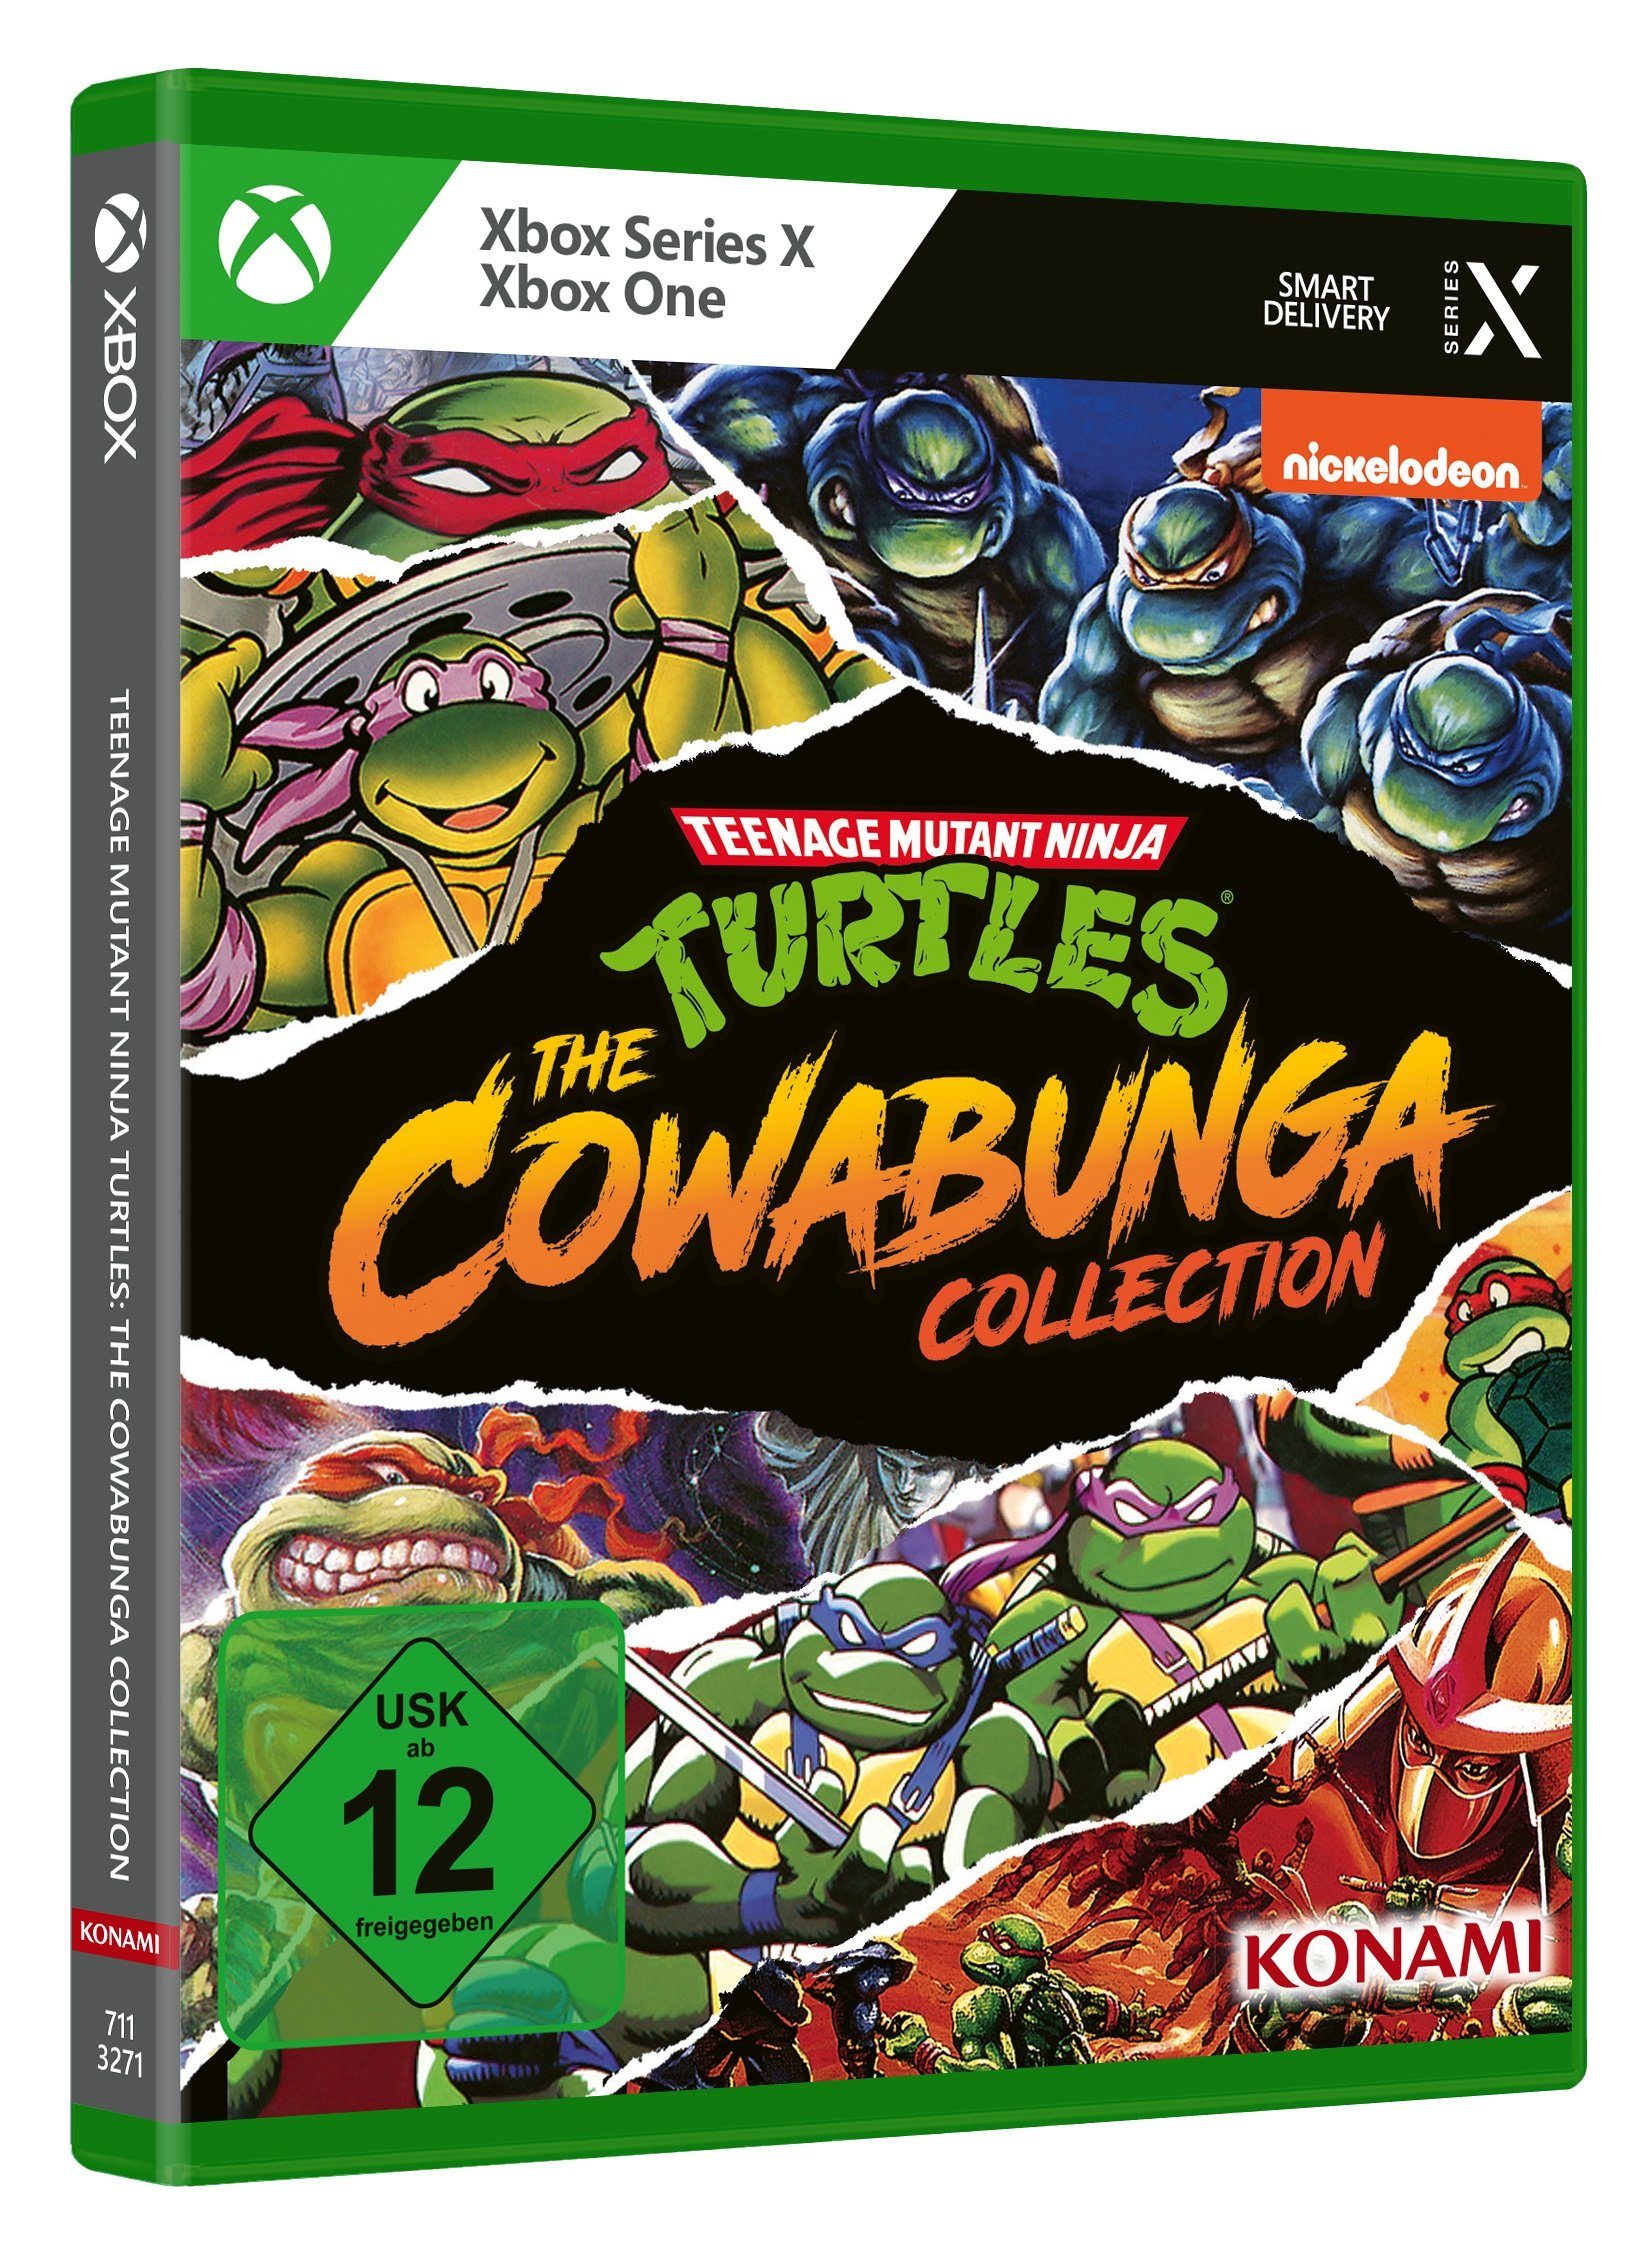 Teenage Mutant One, Xbox Collection Ninja Konami - X The Series Turtles Xbox Cowabunga